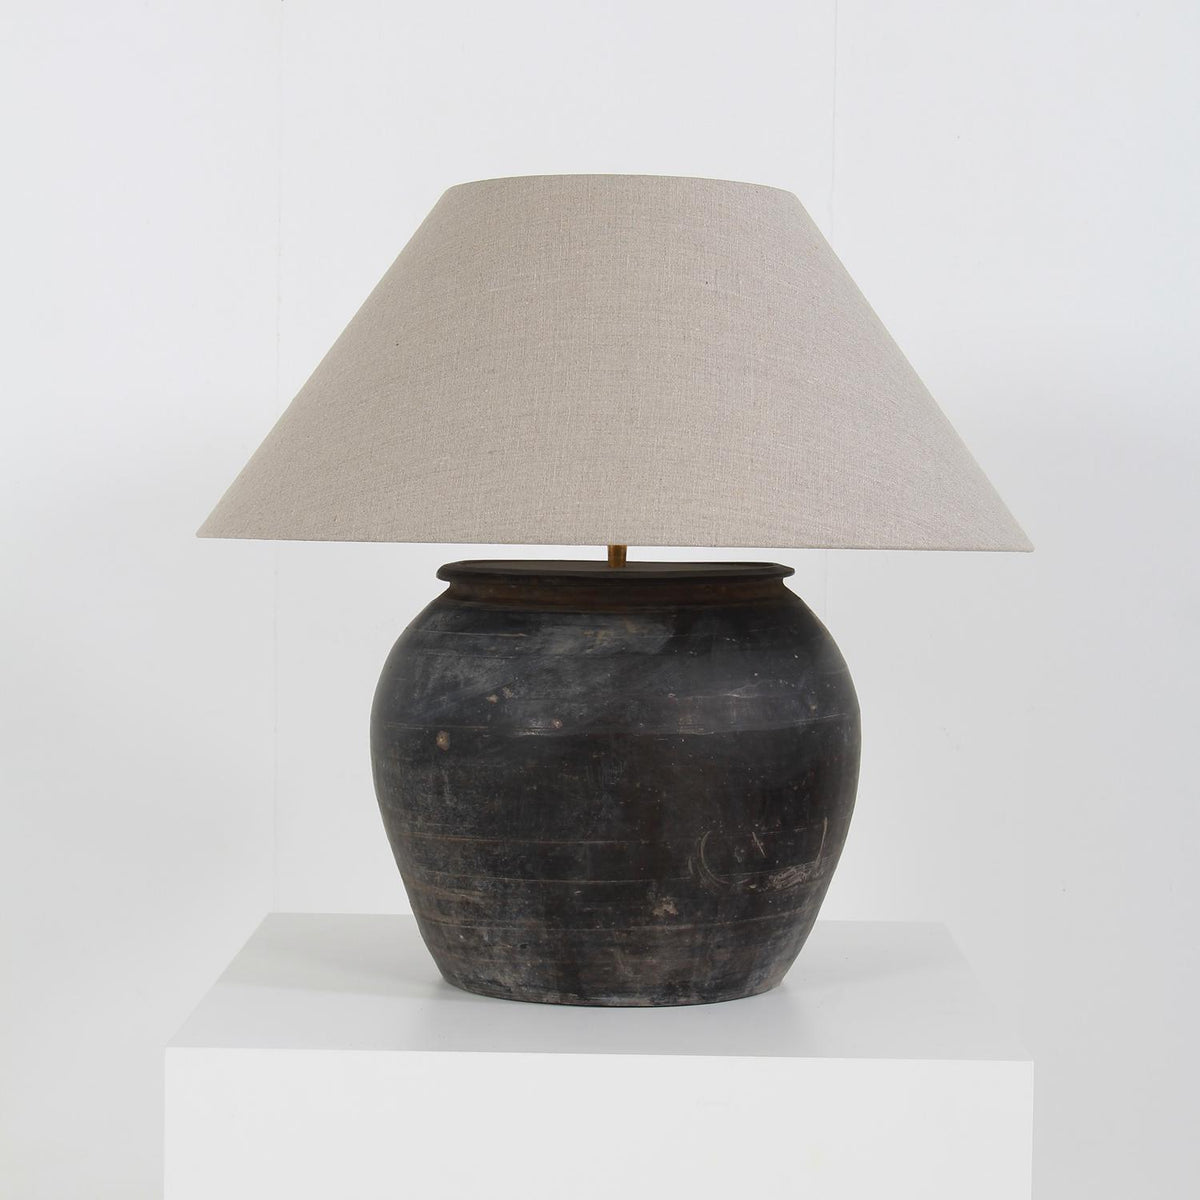 Chinese Storage Jar Lamp with Natural  Linen Shade